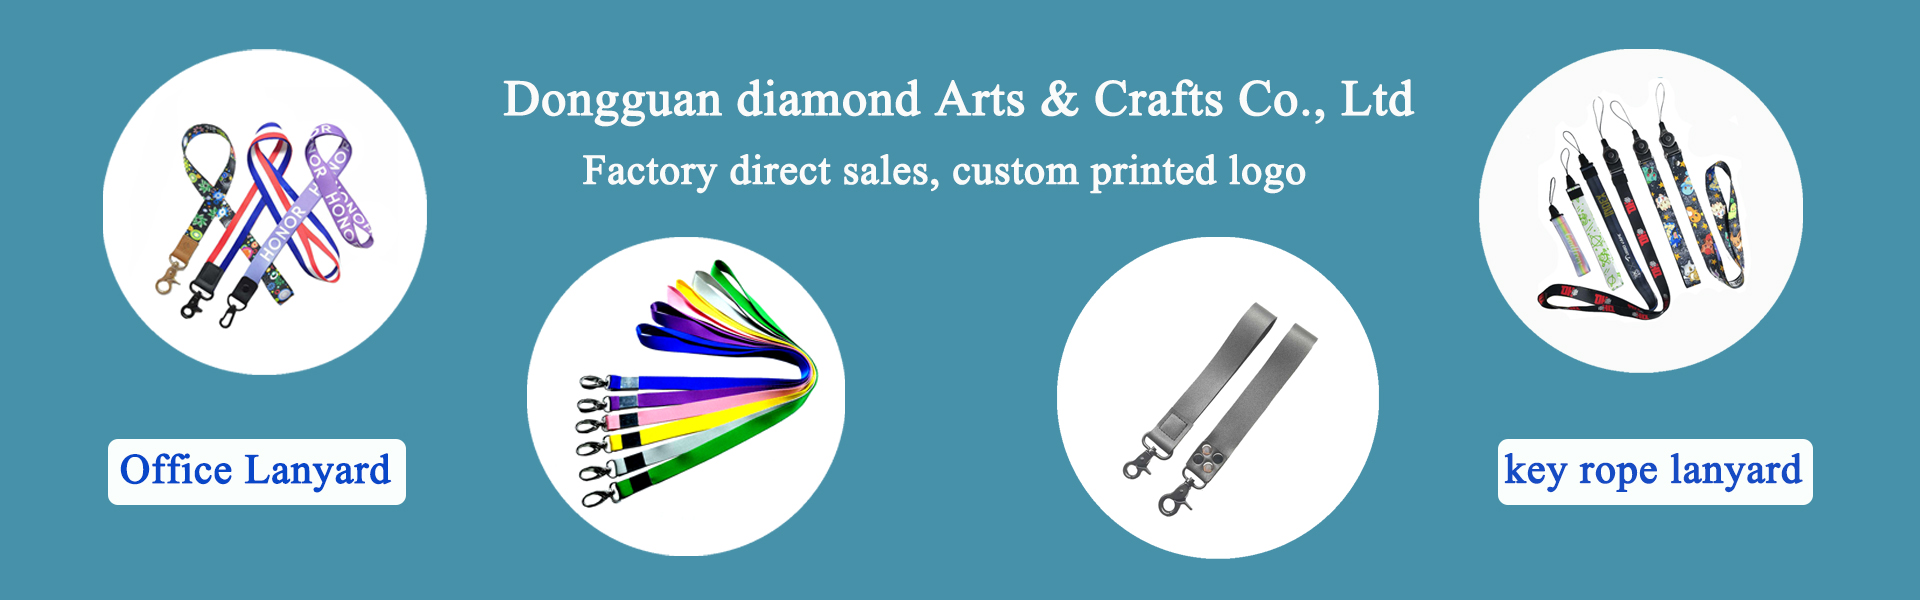 ,Dongguan diamond Arts & Crafts Co., Ltd